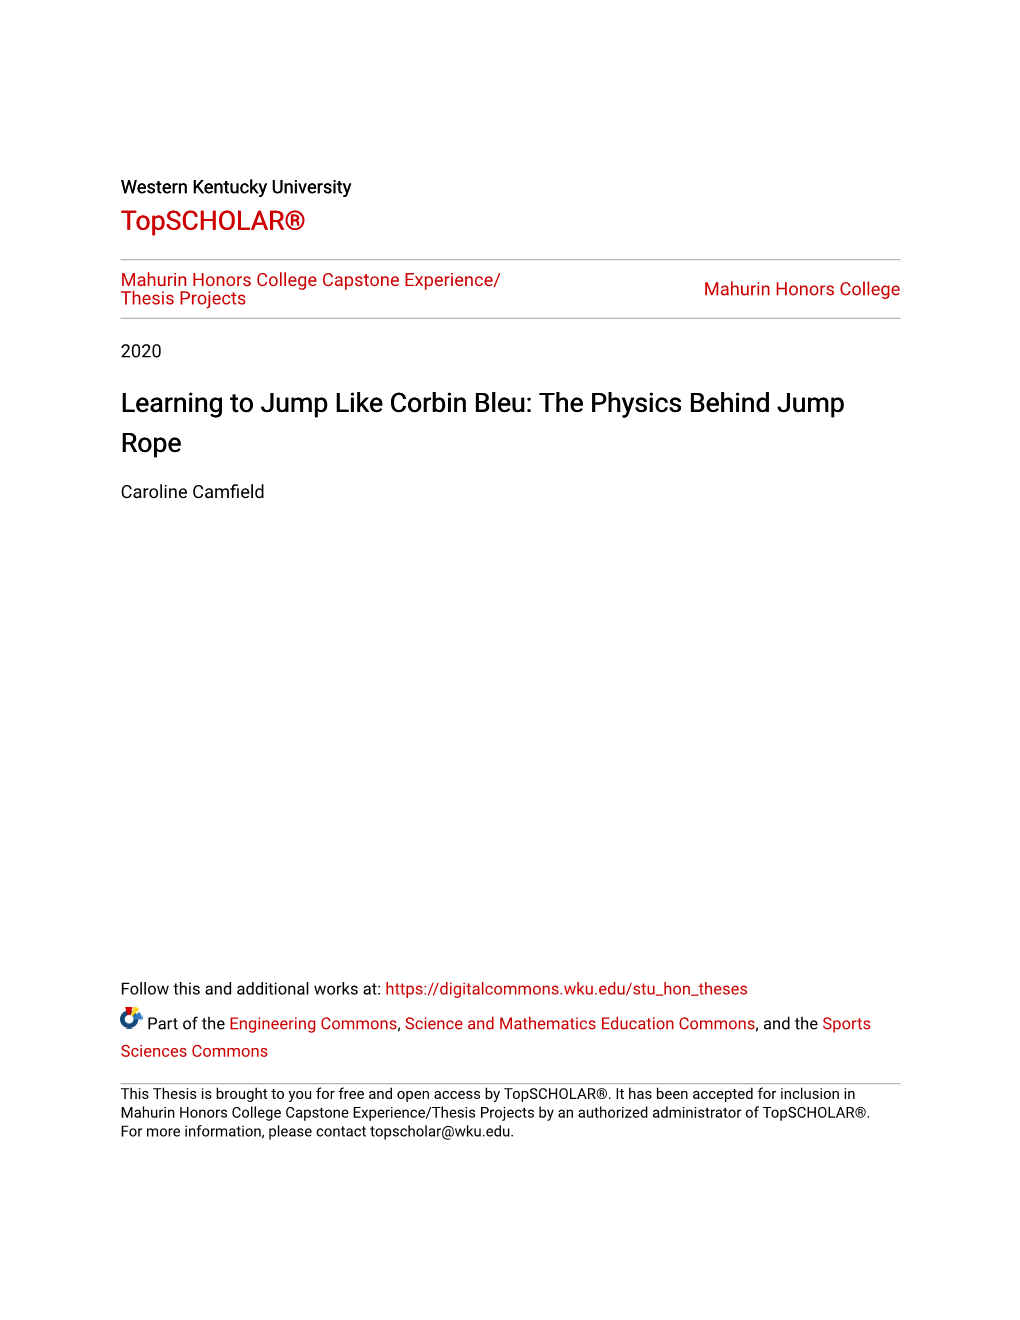 Learning to Jump Like Corbin Bleu: the Physics Behind Jump Rope